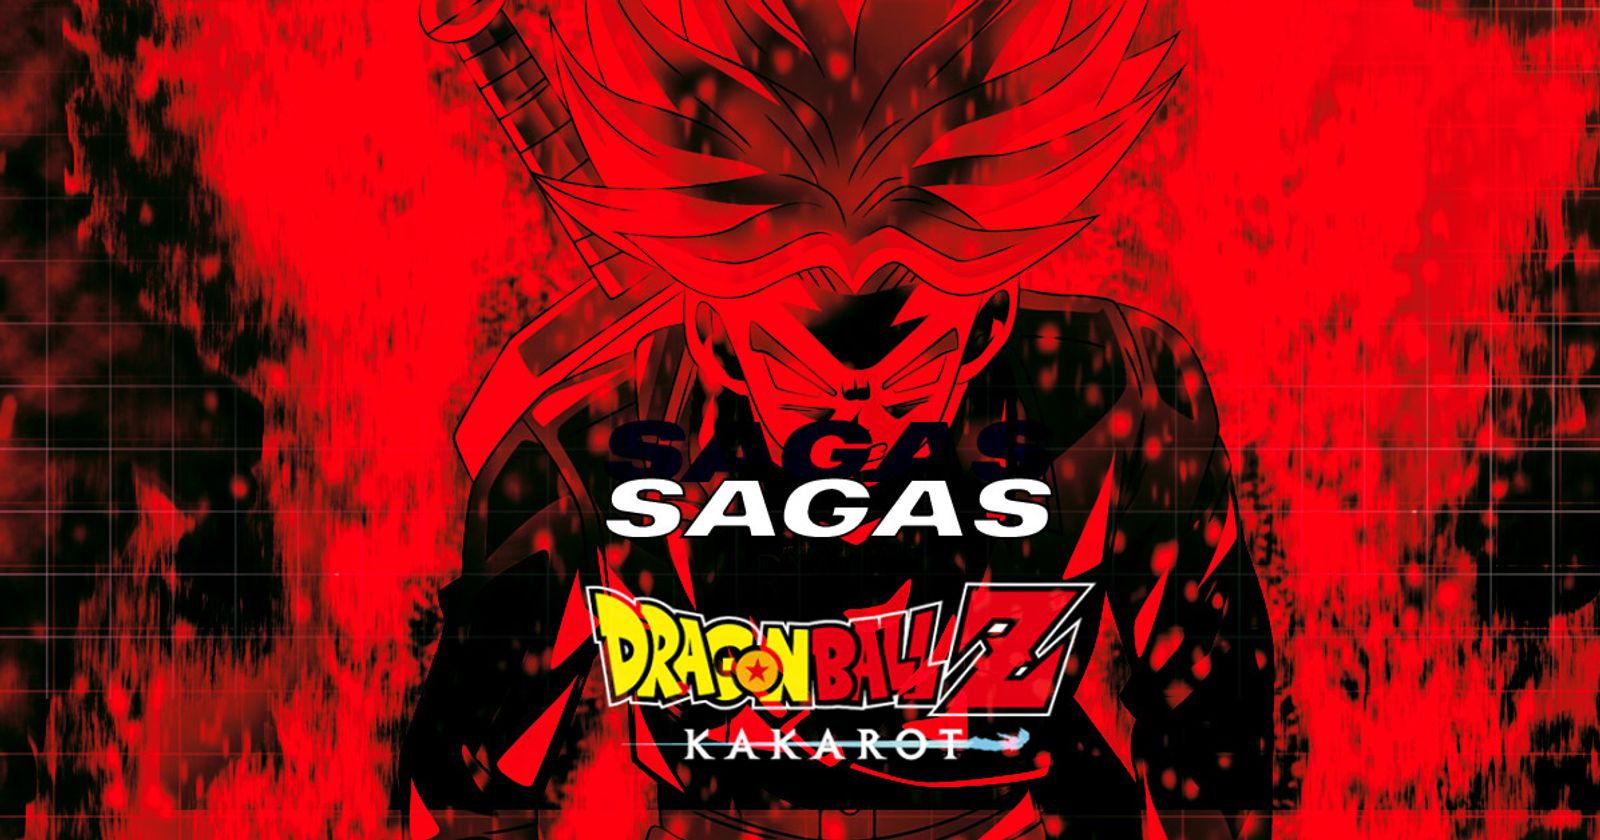 Cell Saga Confirmed for Dragon Ball Z: Kakarot